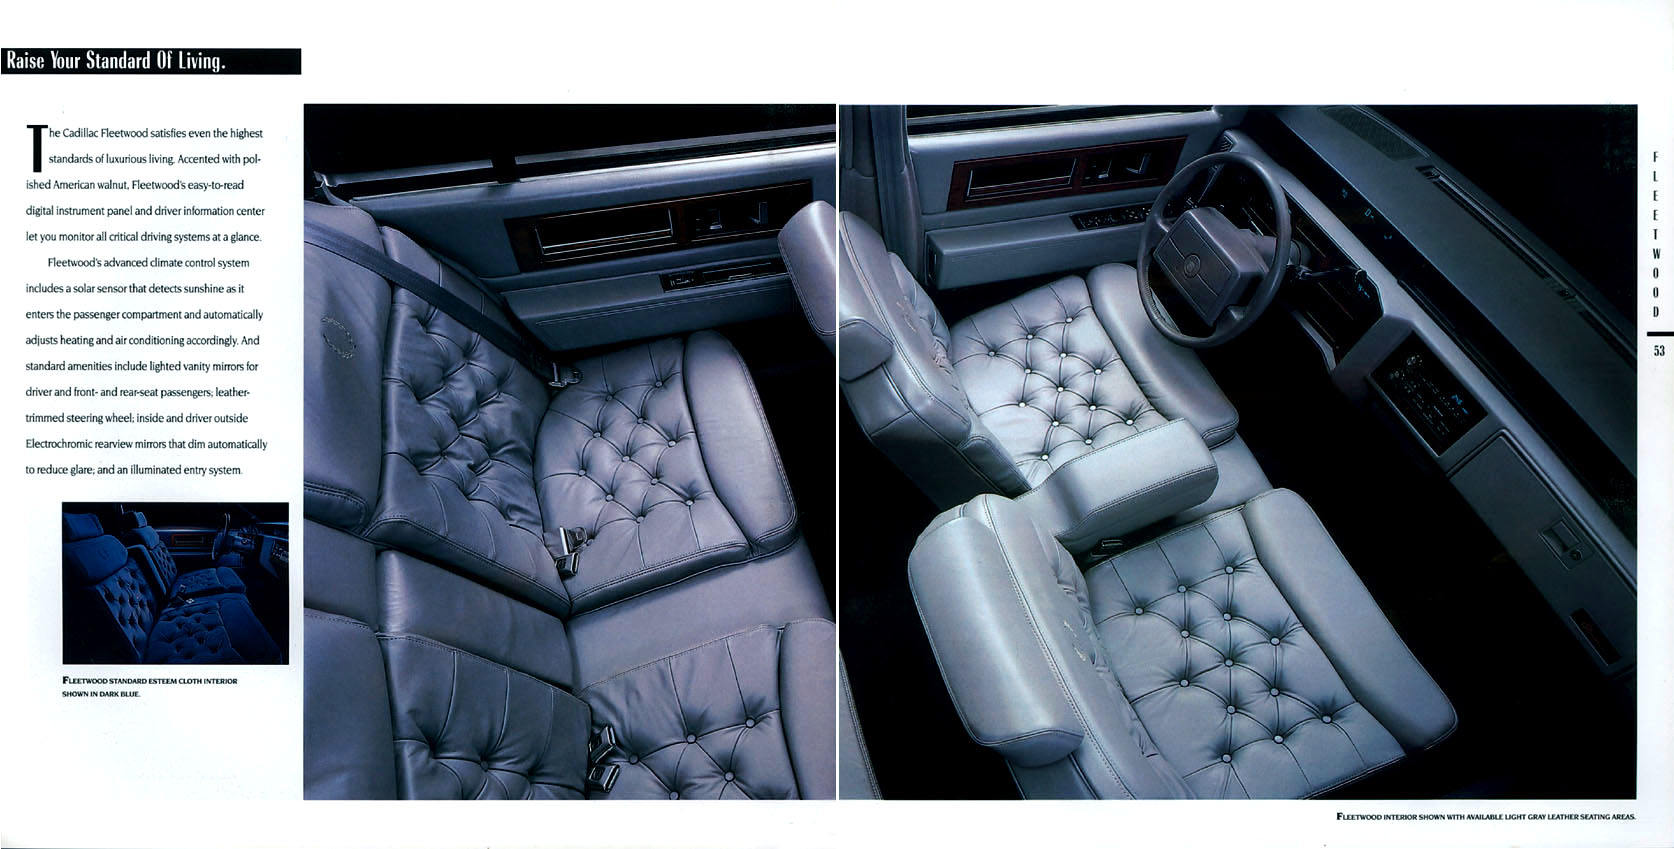 1992 Cadillac